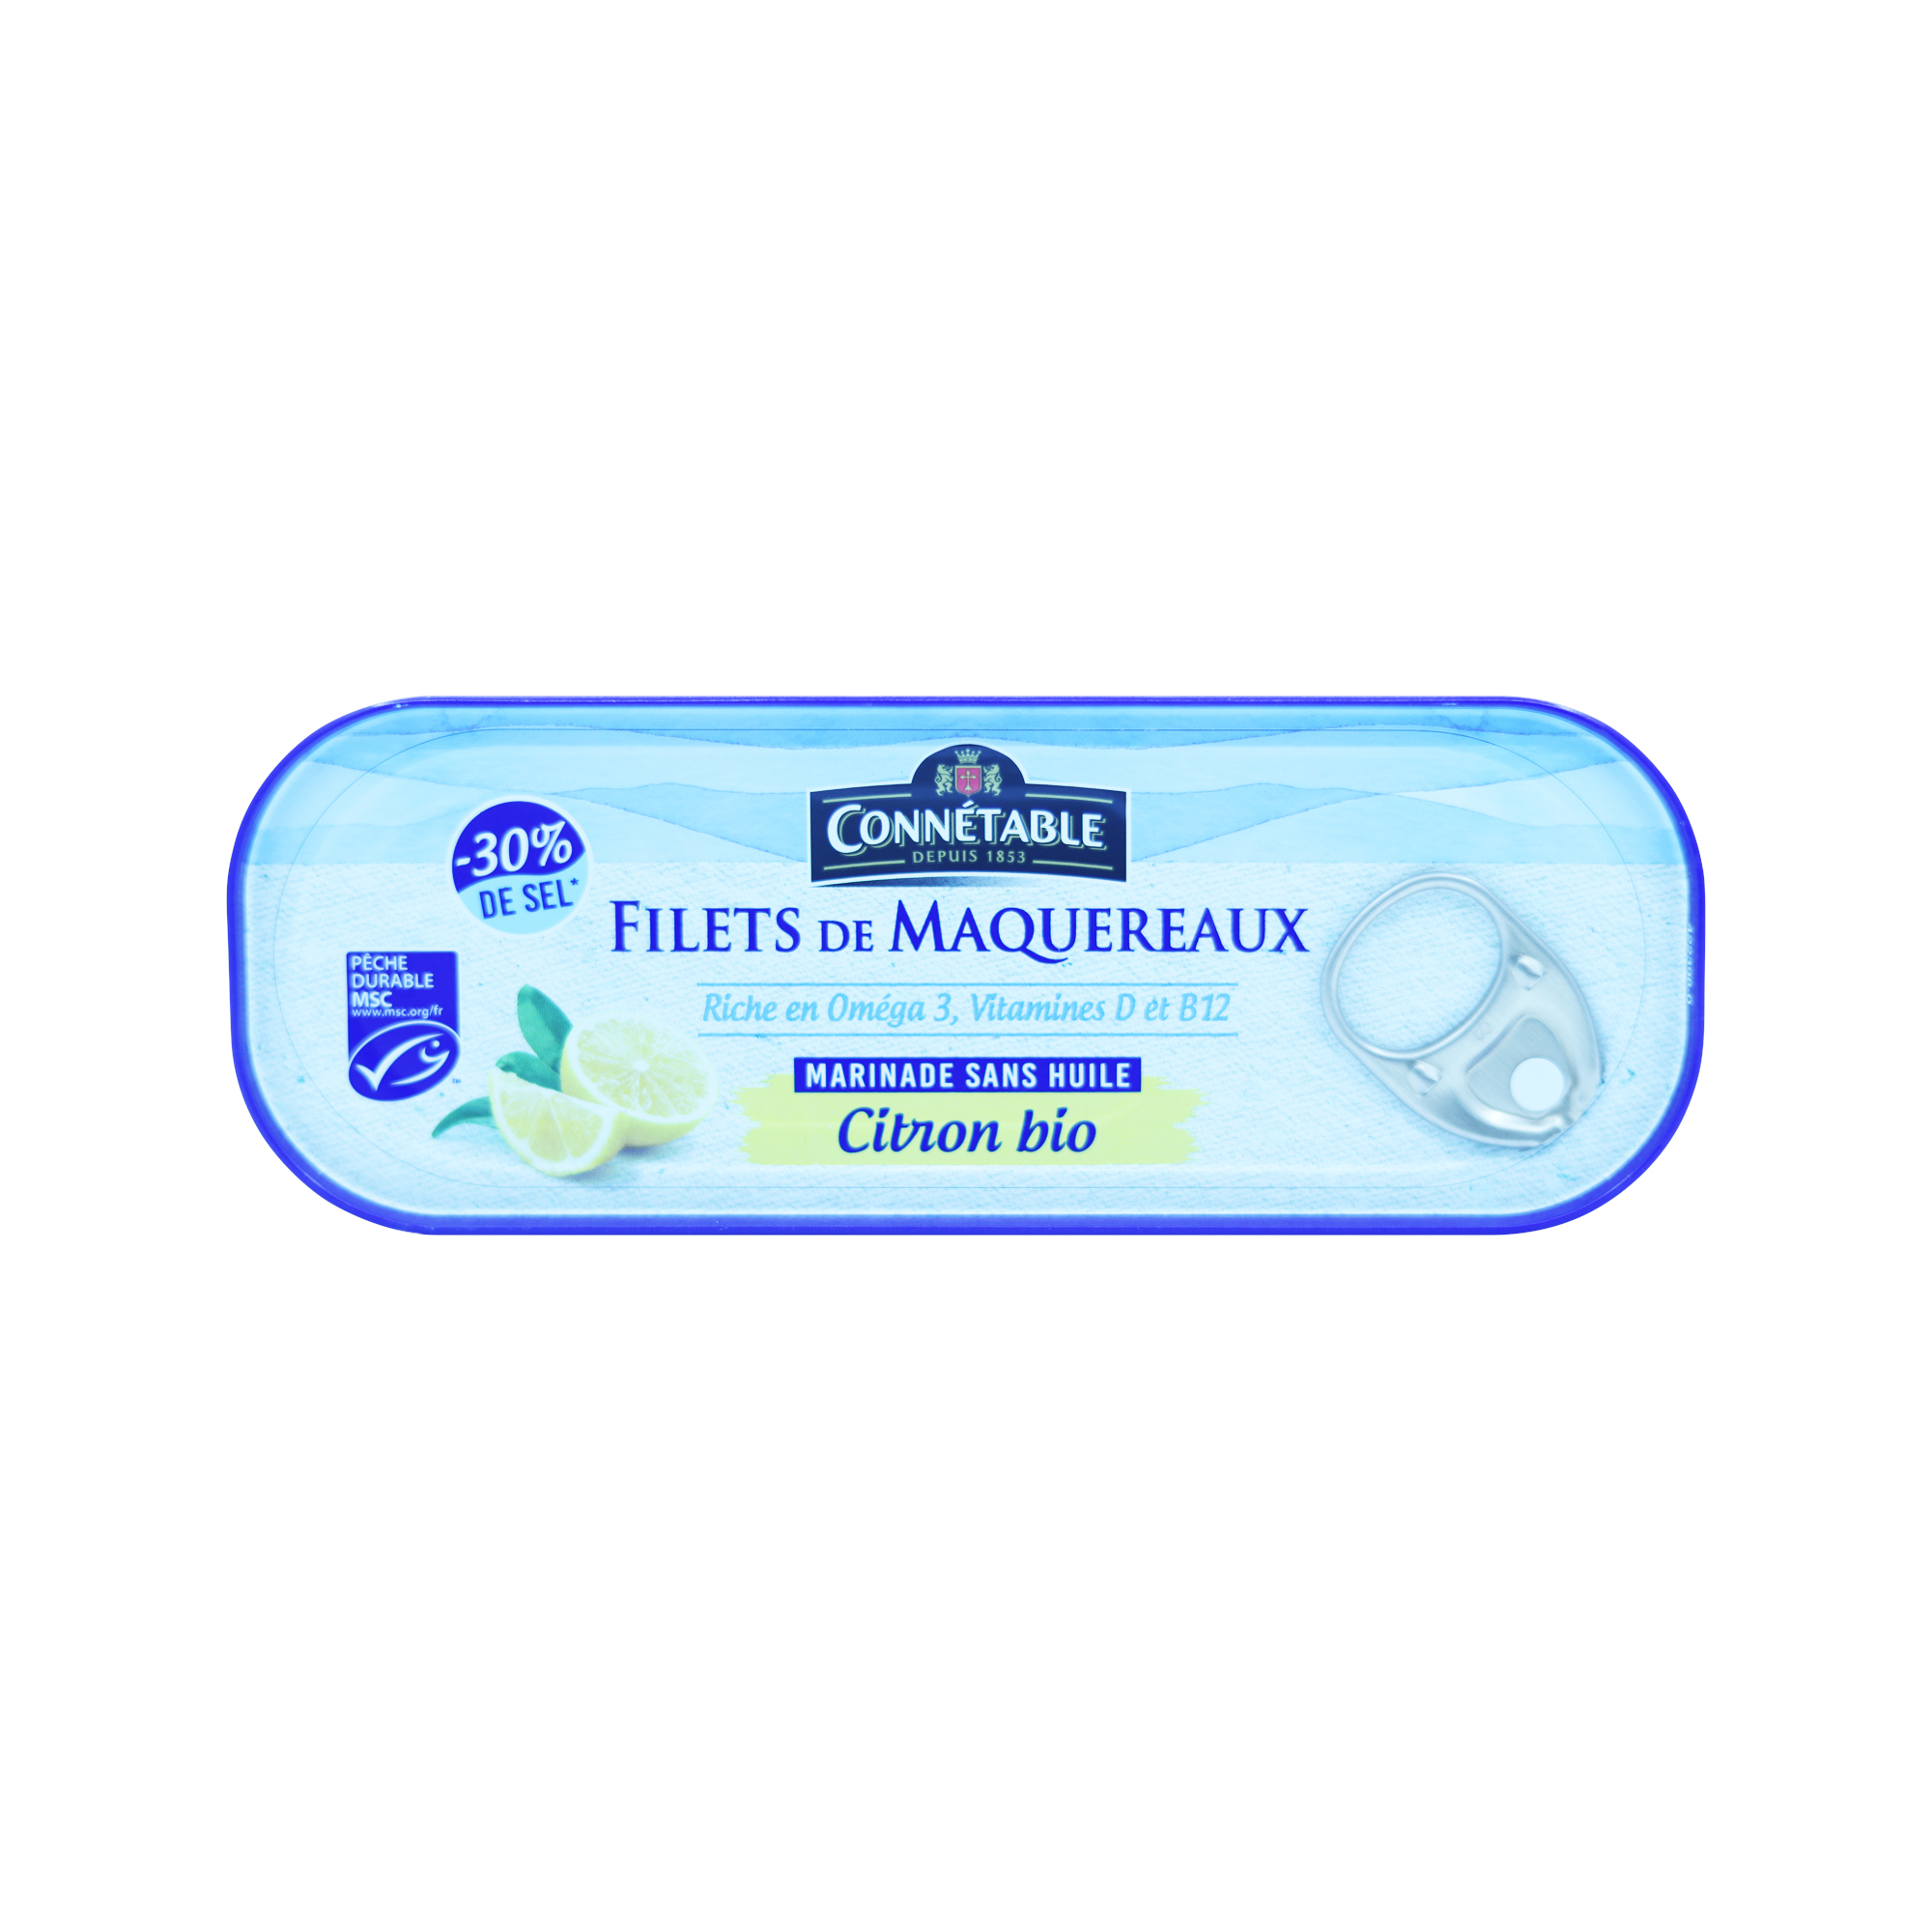 Connetable MSC Mackerel fillets in orgianic lemond marinade without oil- low salt 130g